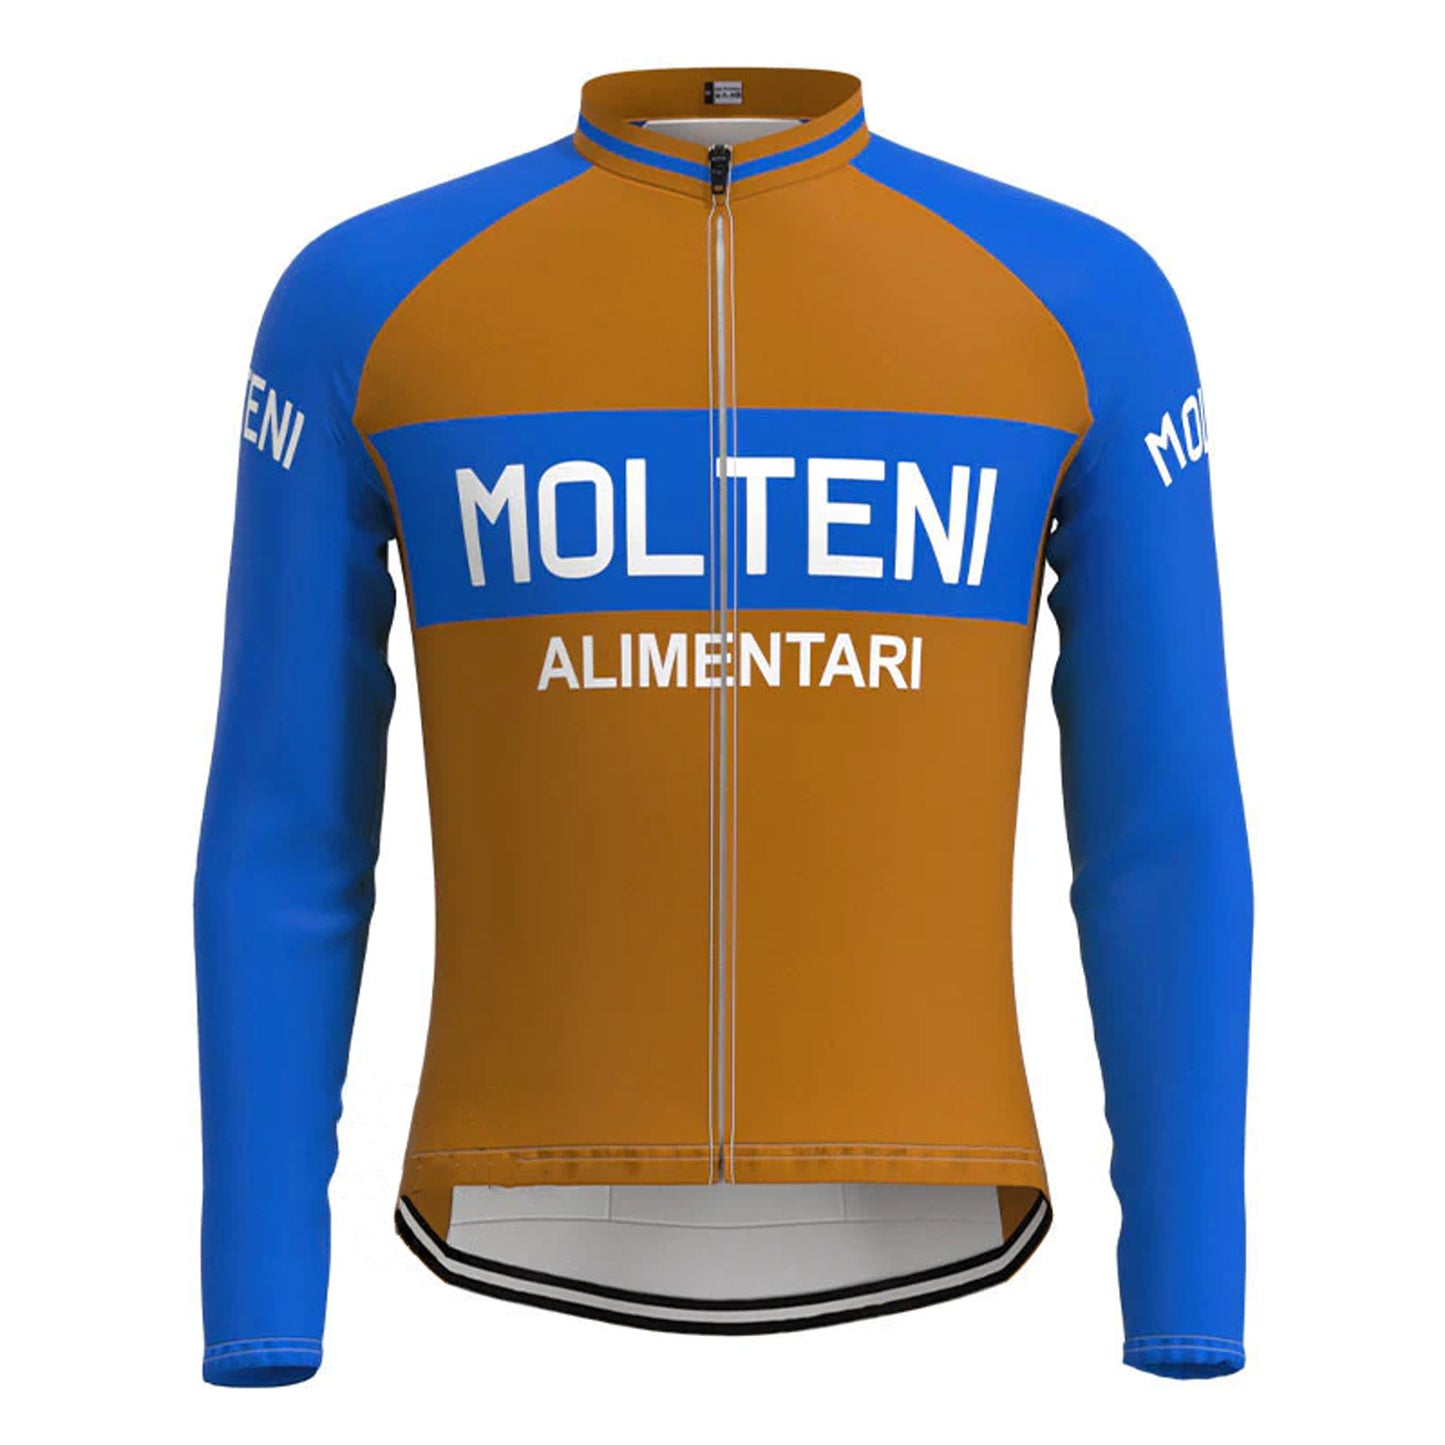 Molteni Brown Long Sleeve Cycling Jersey Matching Set